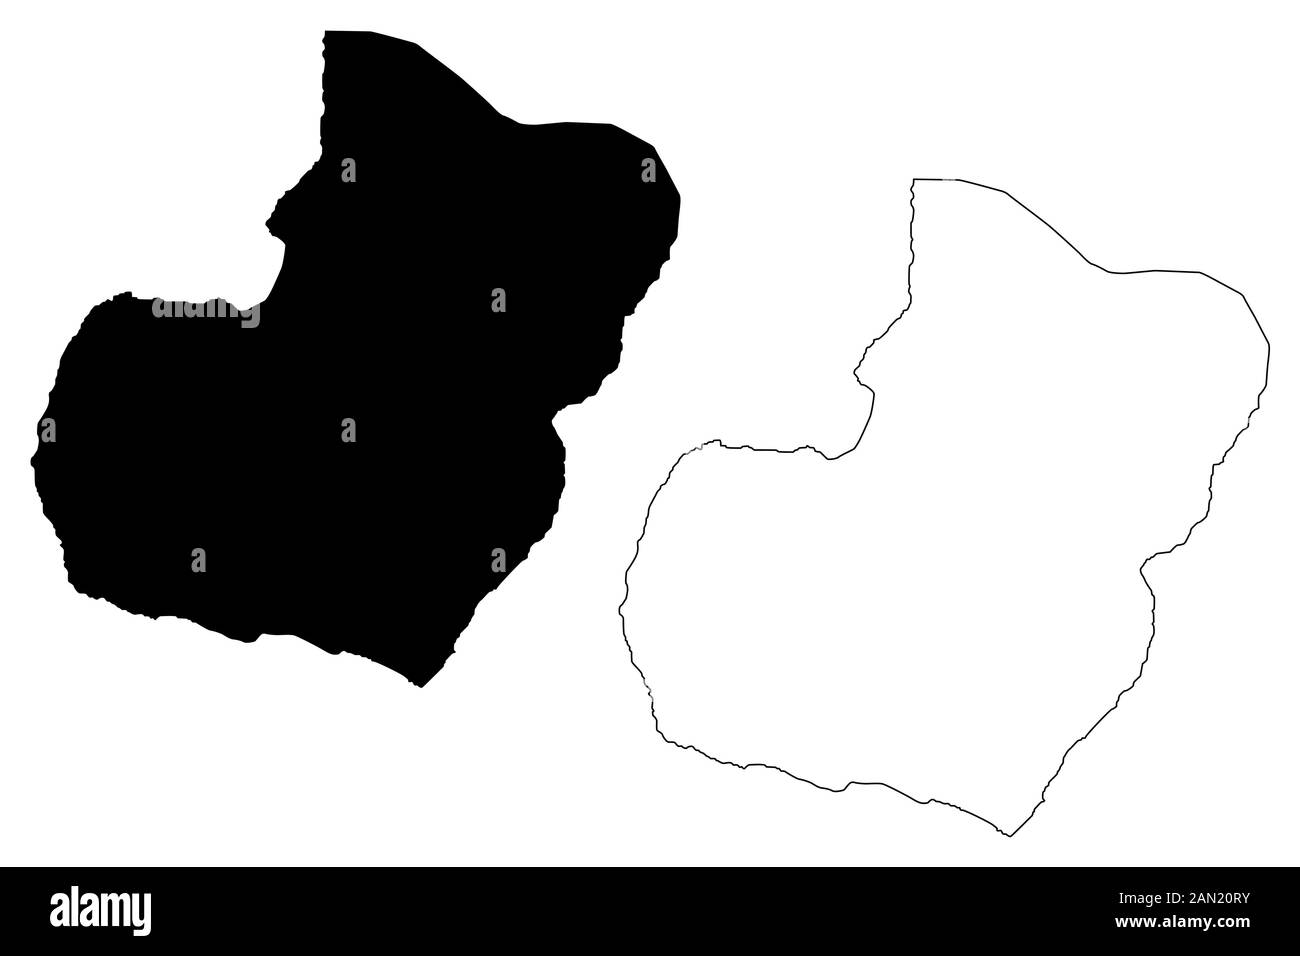 Bioko Sur (Republic of Equatorial Guinea, Provinces of Equatorial Guinea) map vector illustration, scribble sketch Bioko Sur Province (Bioko island) m Stock Vector